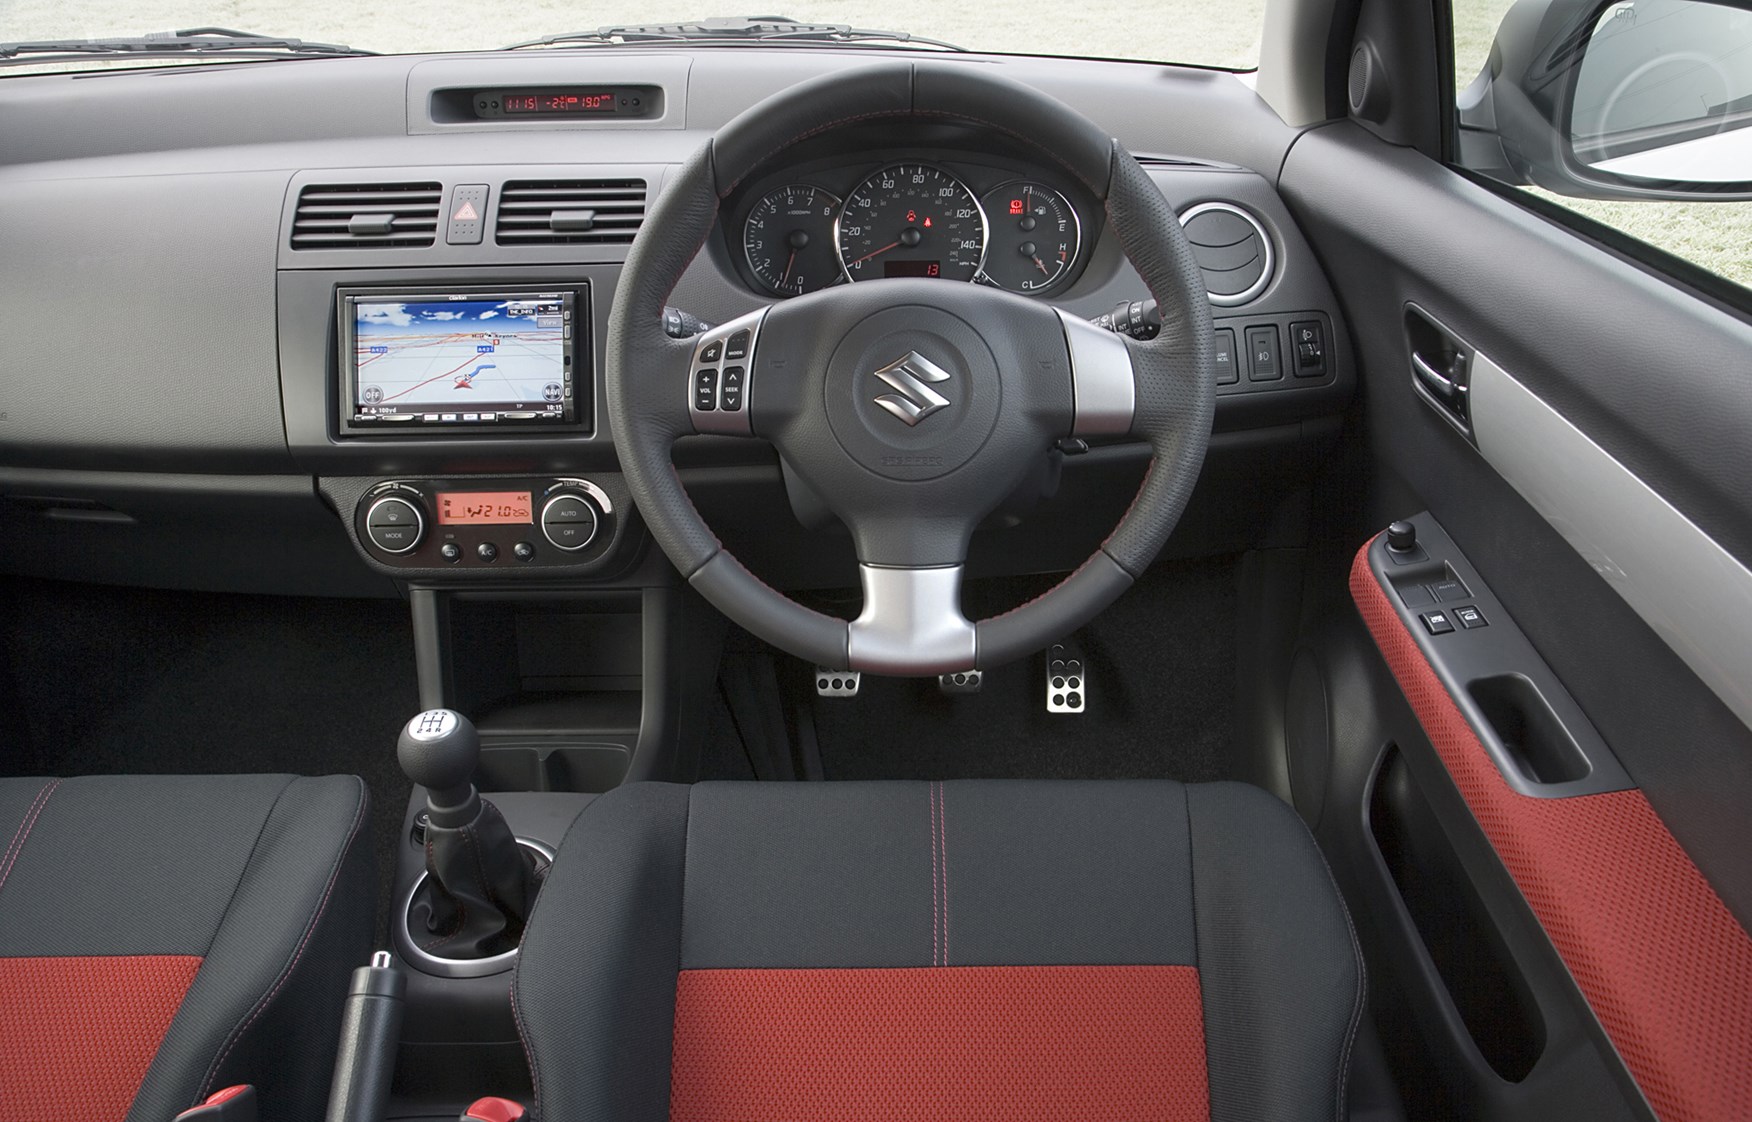 Used Suzuki Swift Sport 2006 2011 Interior Parkers